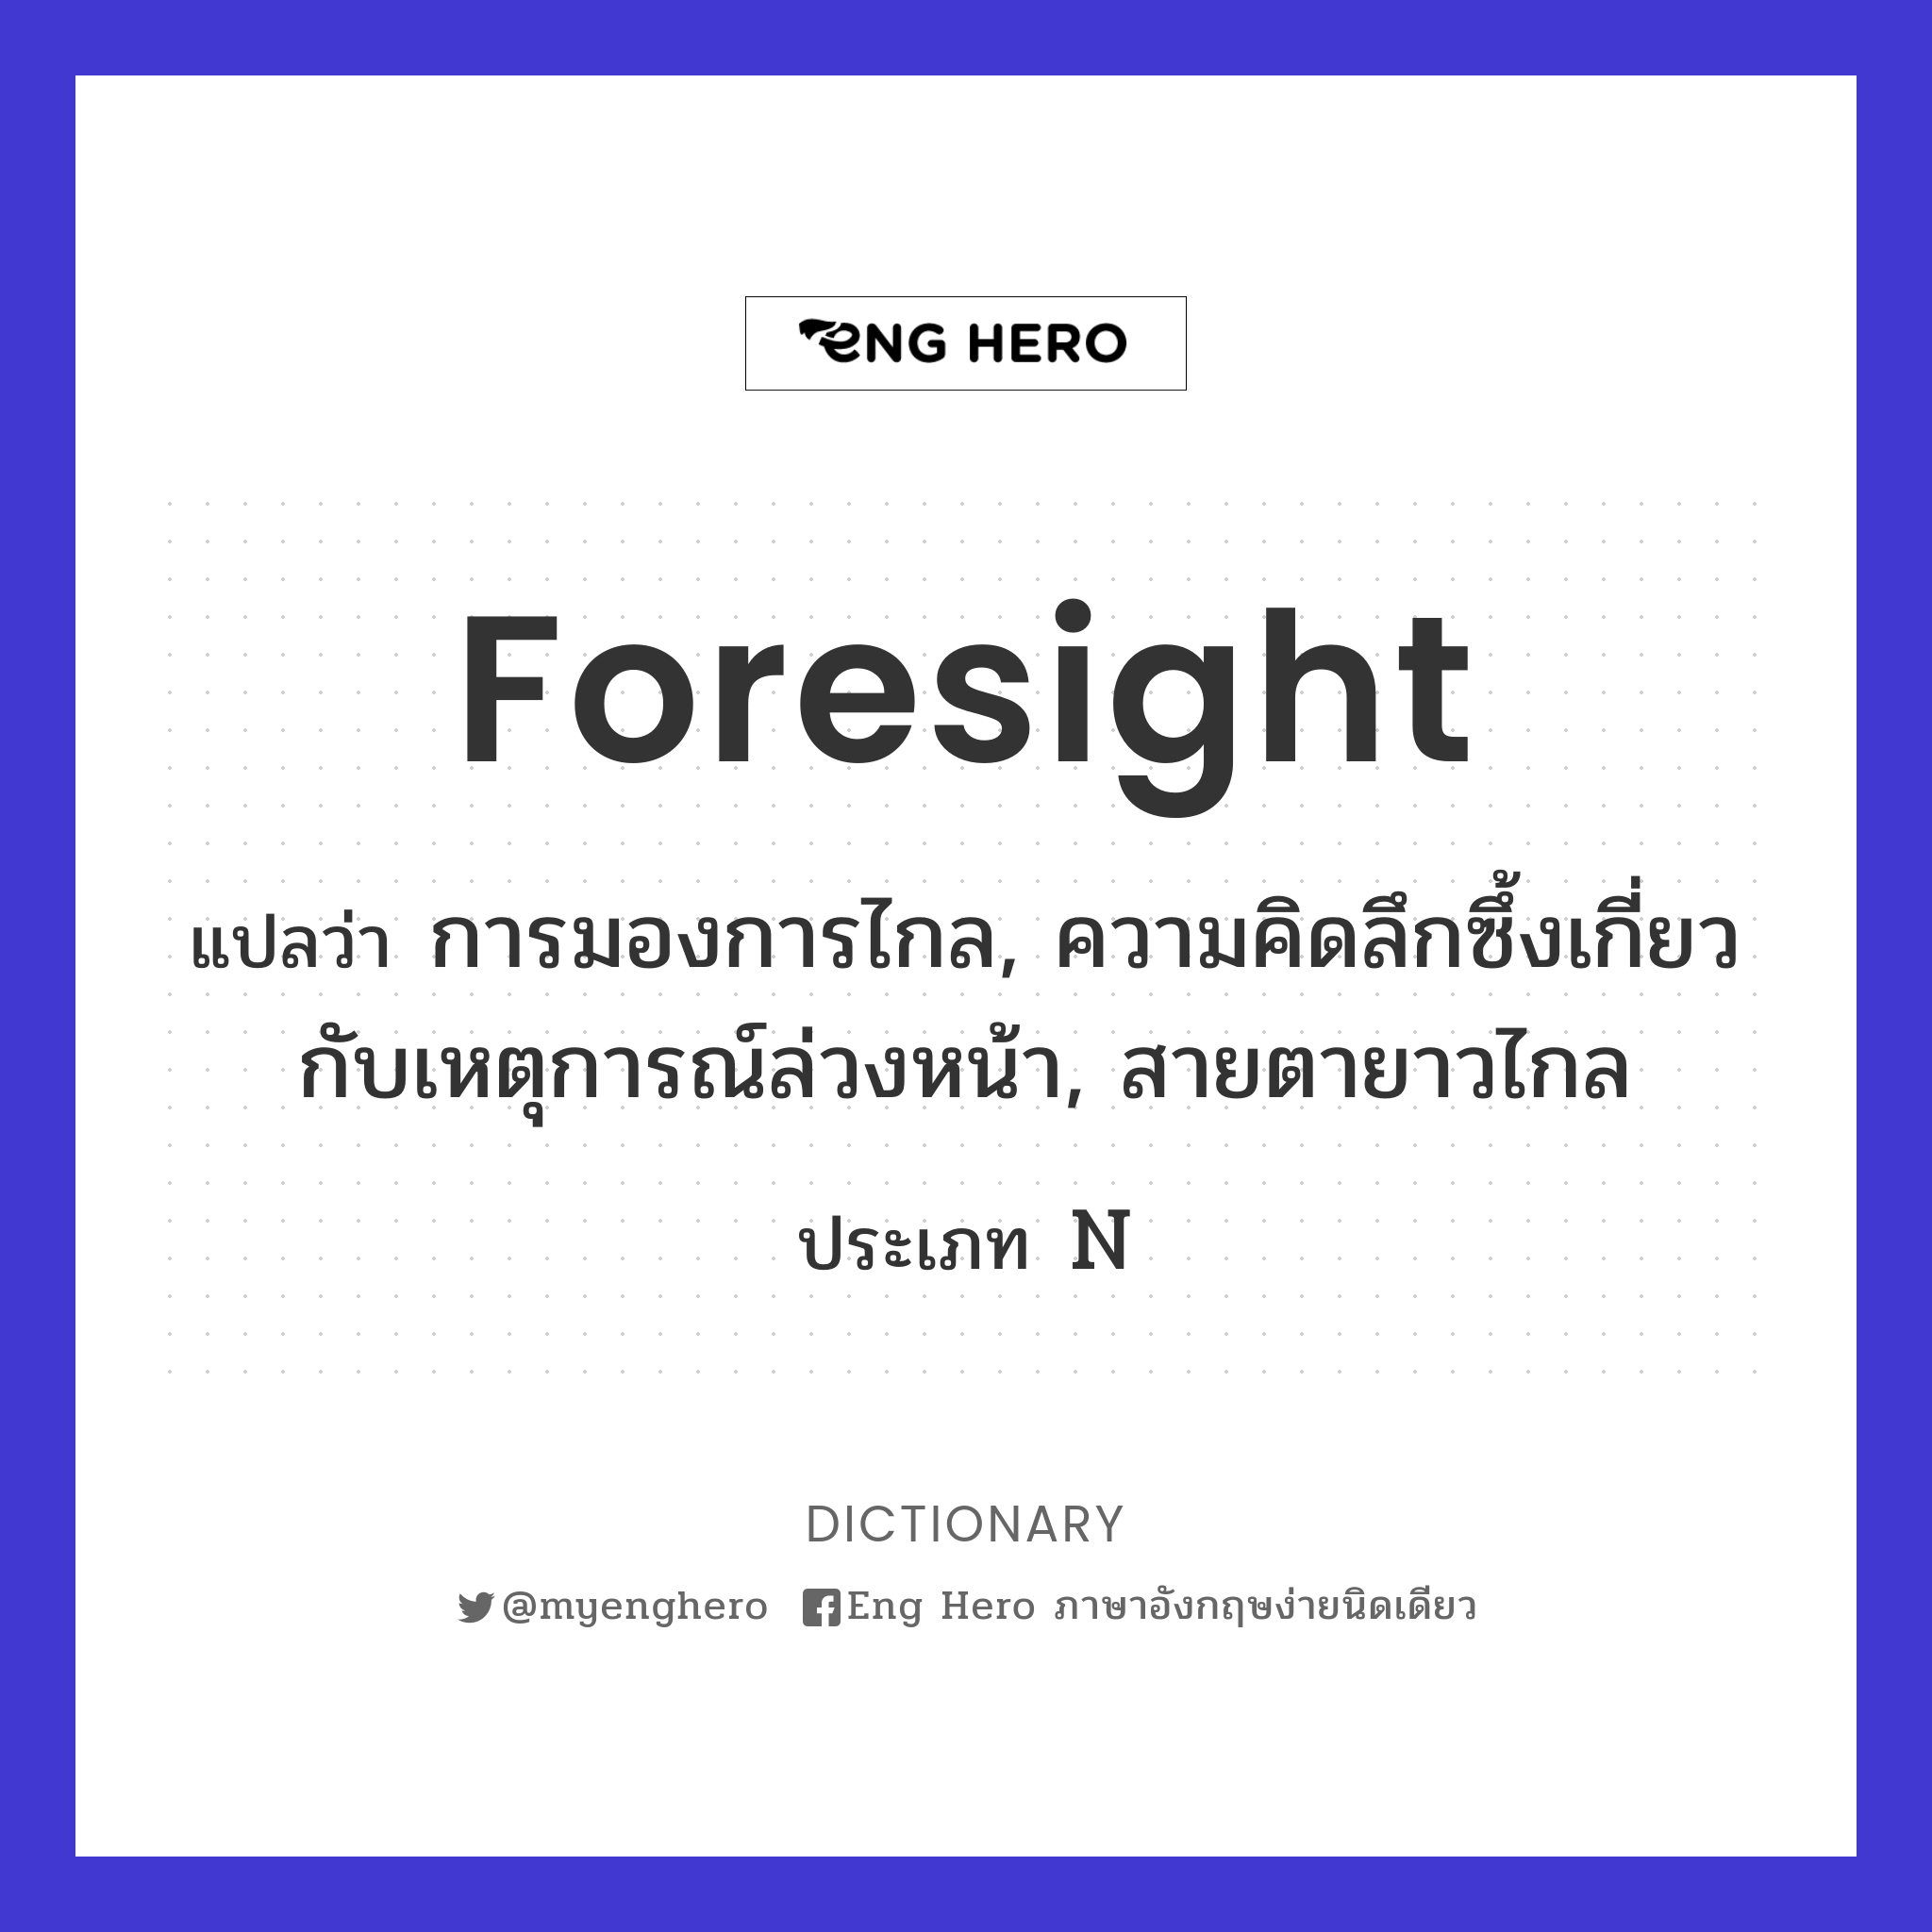 foresight